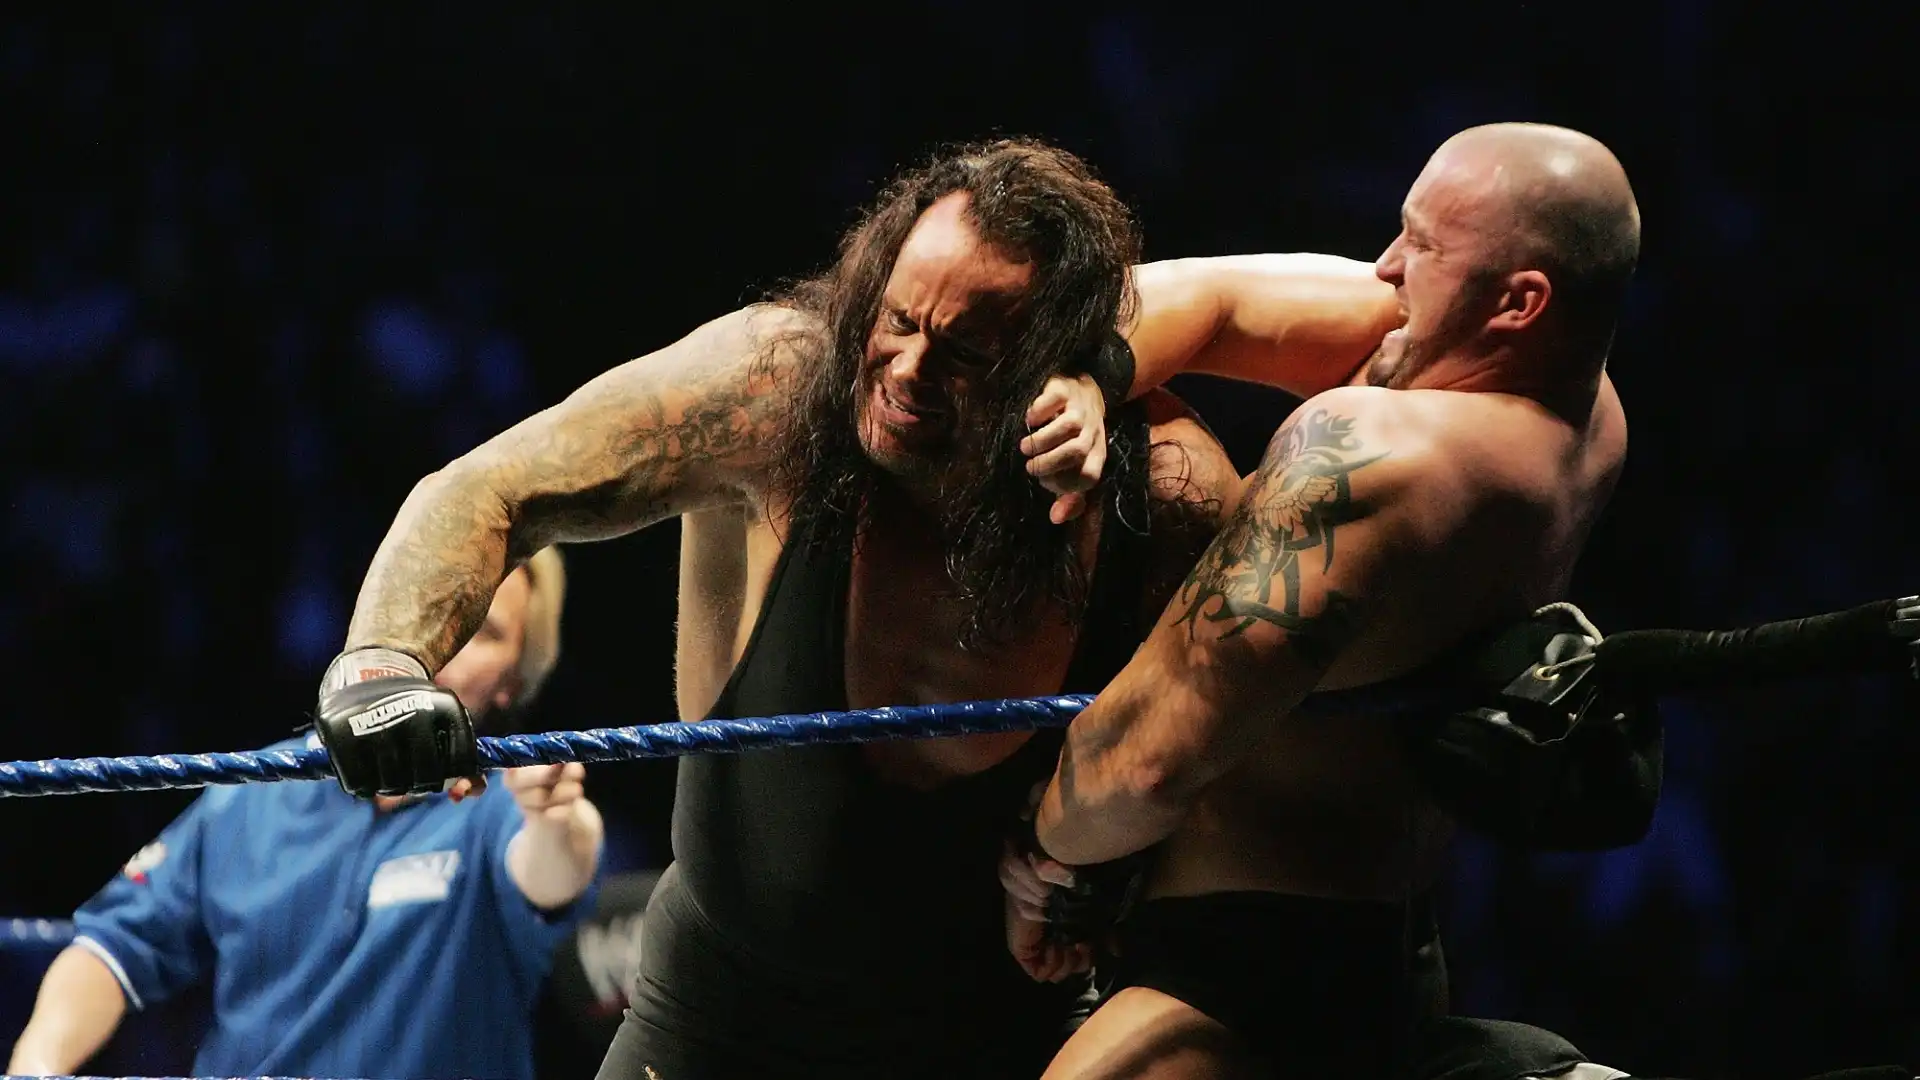 The Undertaker: 27 match (25 W, 2 L)